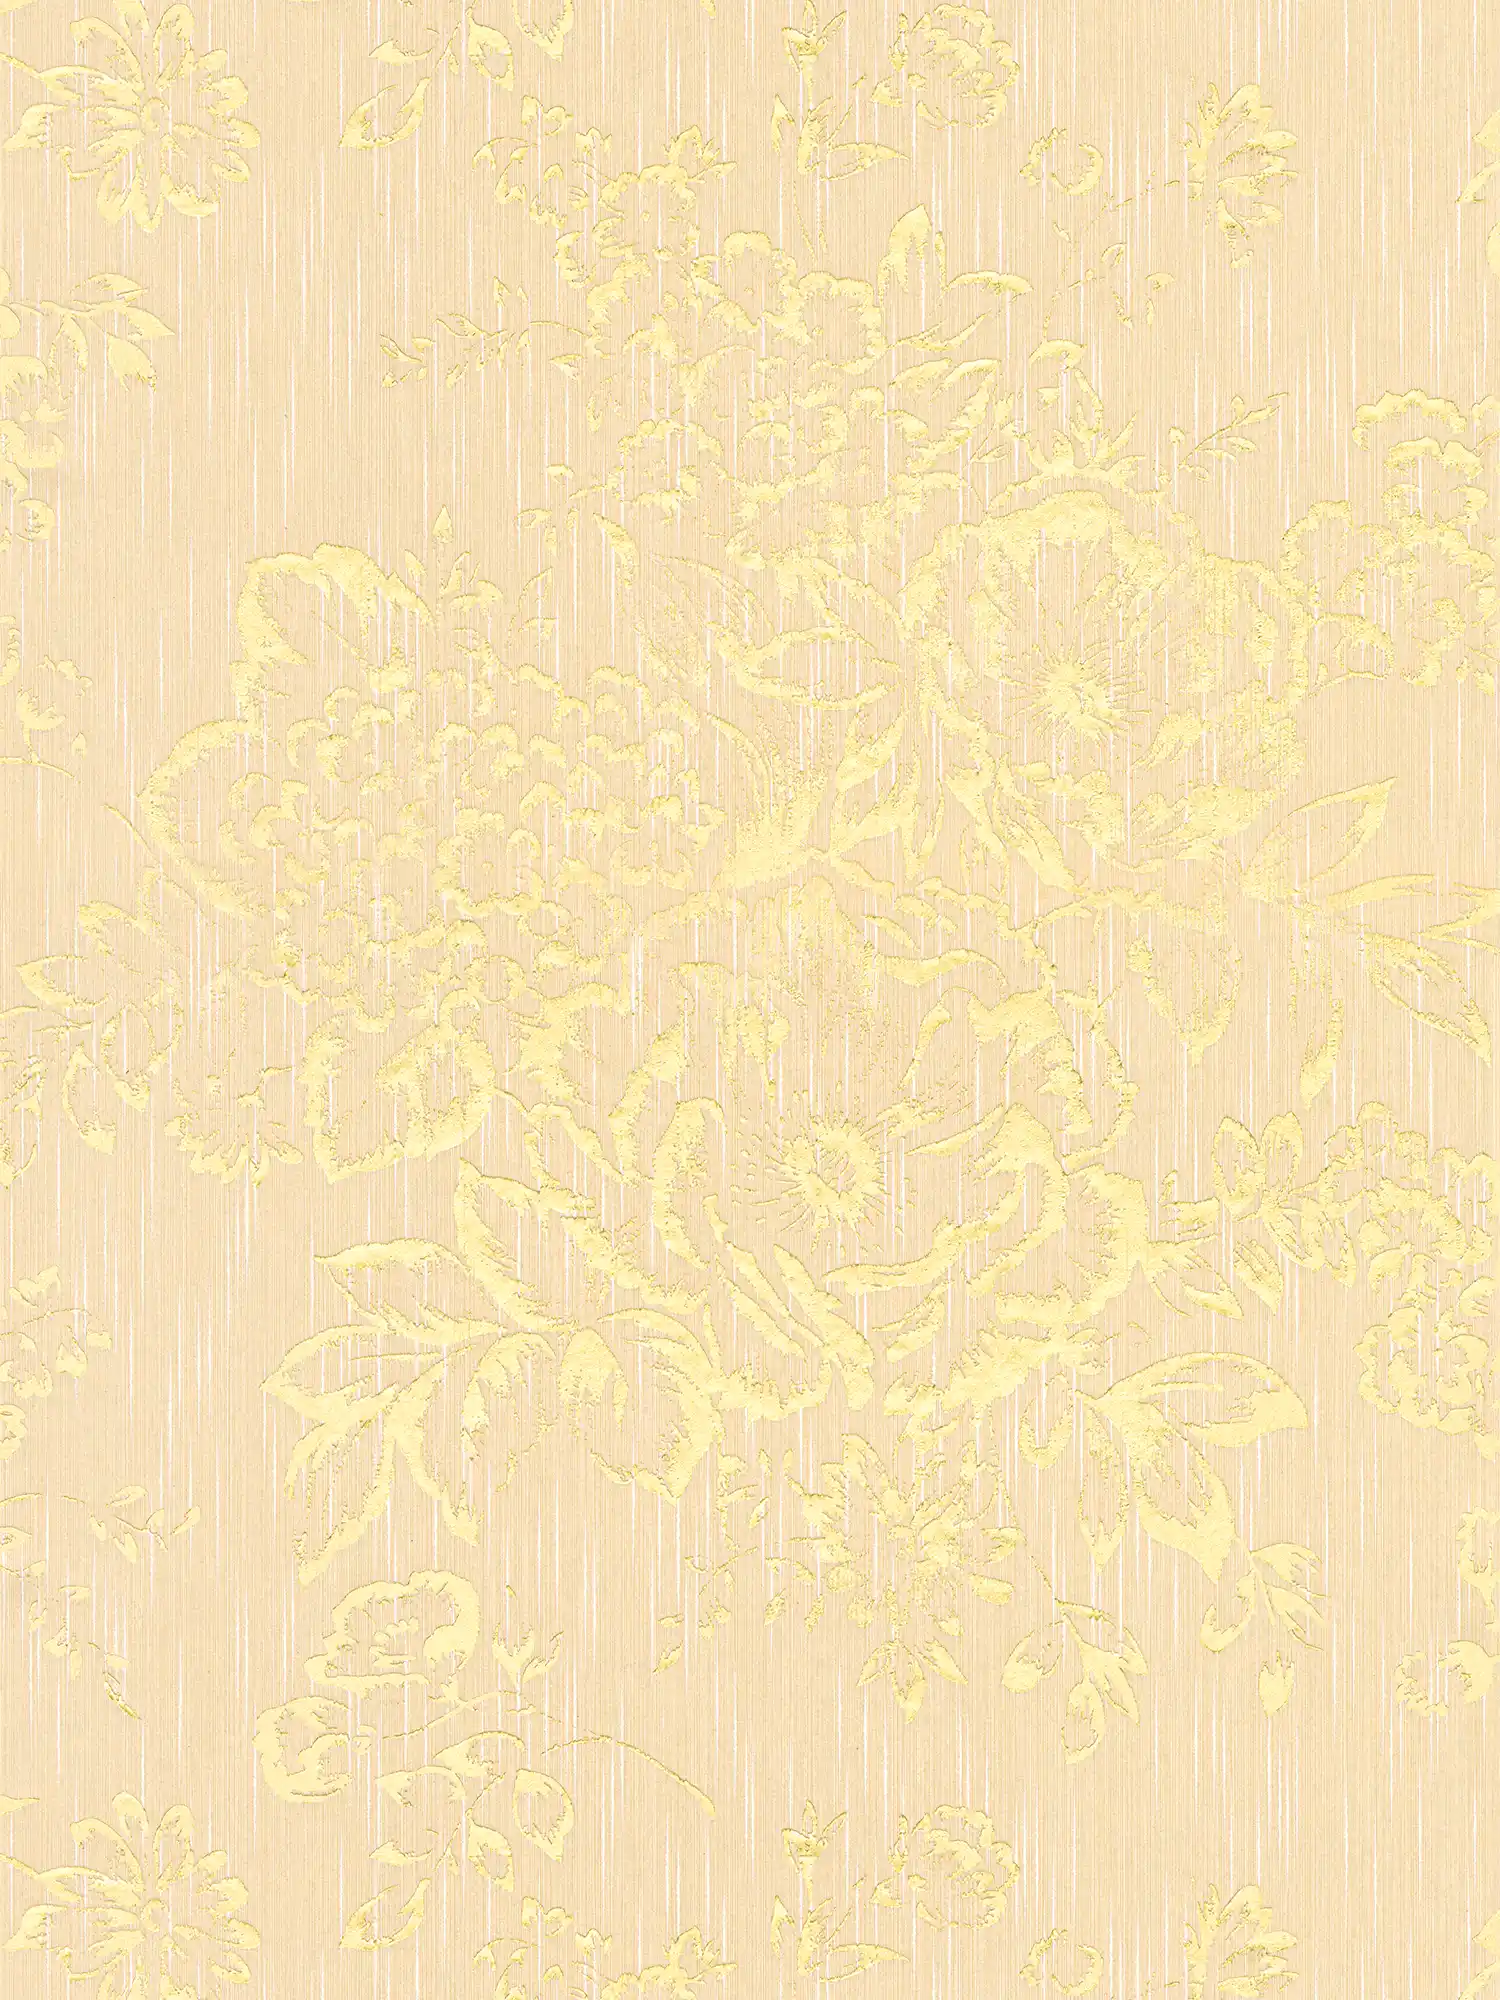 Papel pintado texturizado con motivos florales dorados - oro, crema
